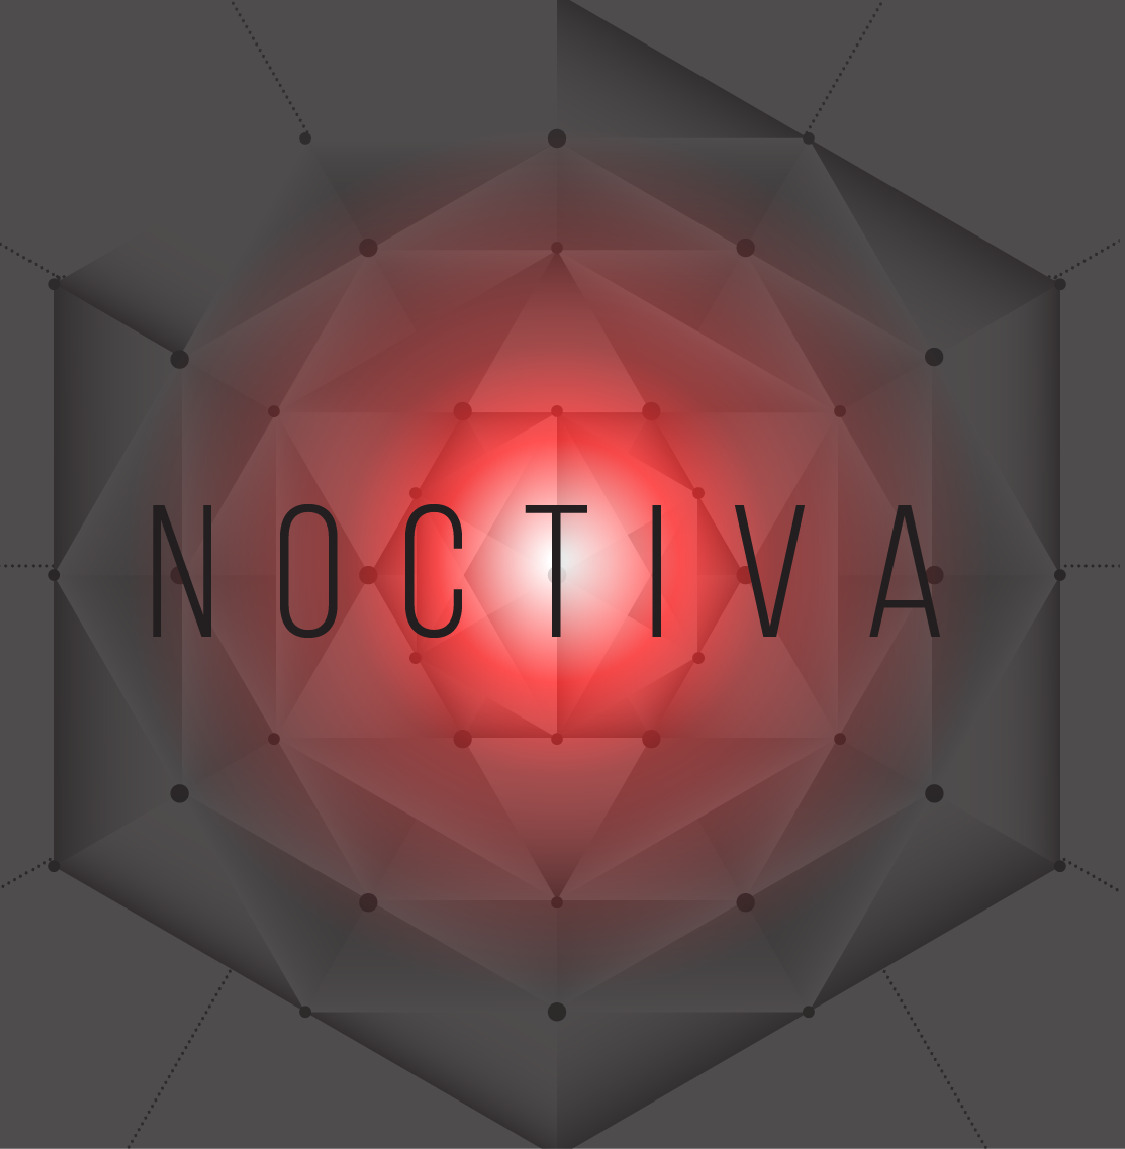 Vitas – 7th Element (Noctiva Blazed House Remix)